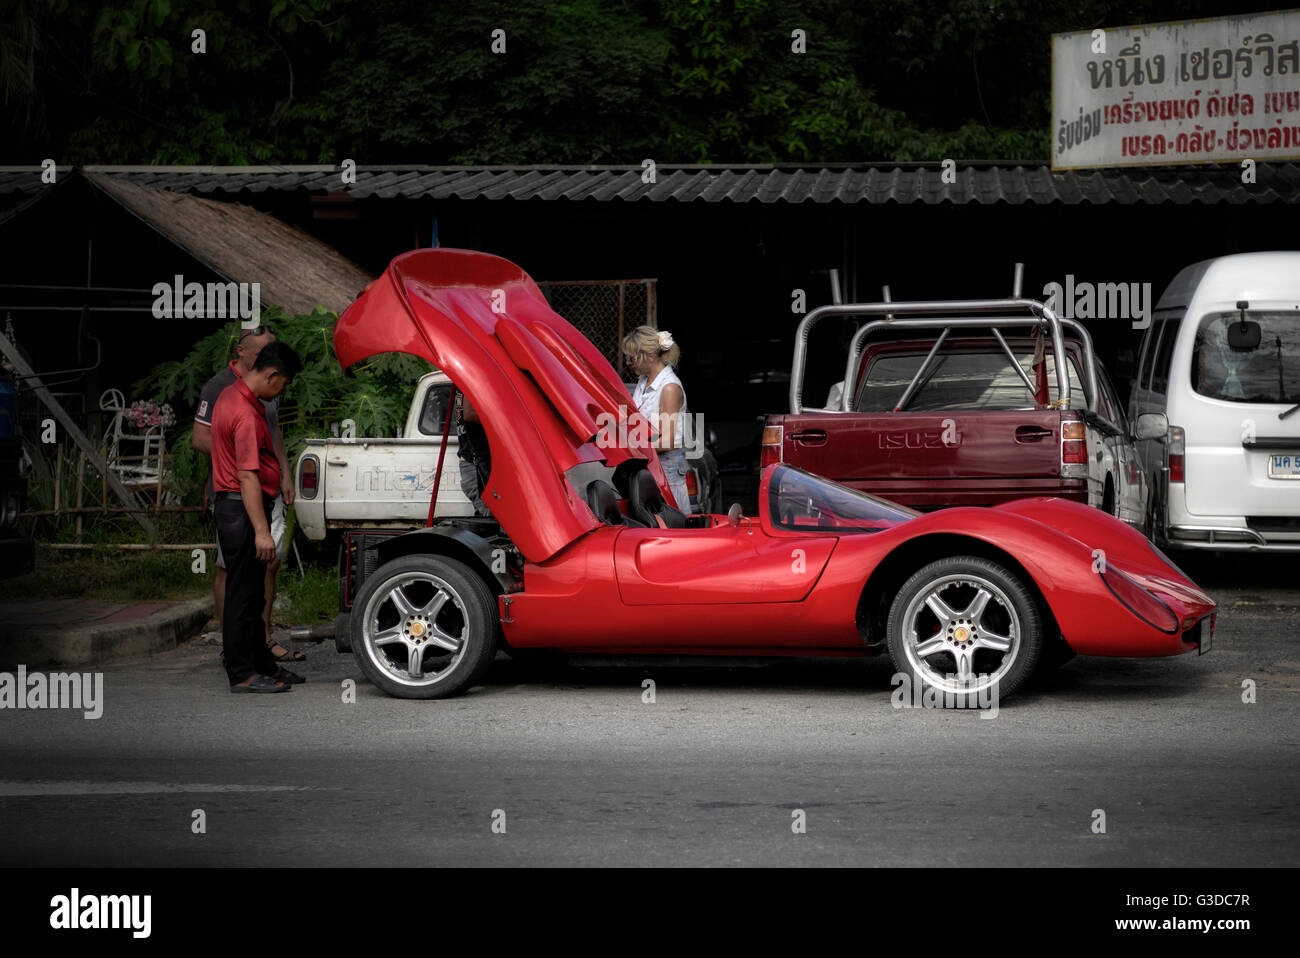 Kit car red.  Ferrari look a like kit car in red. Stock Photo